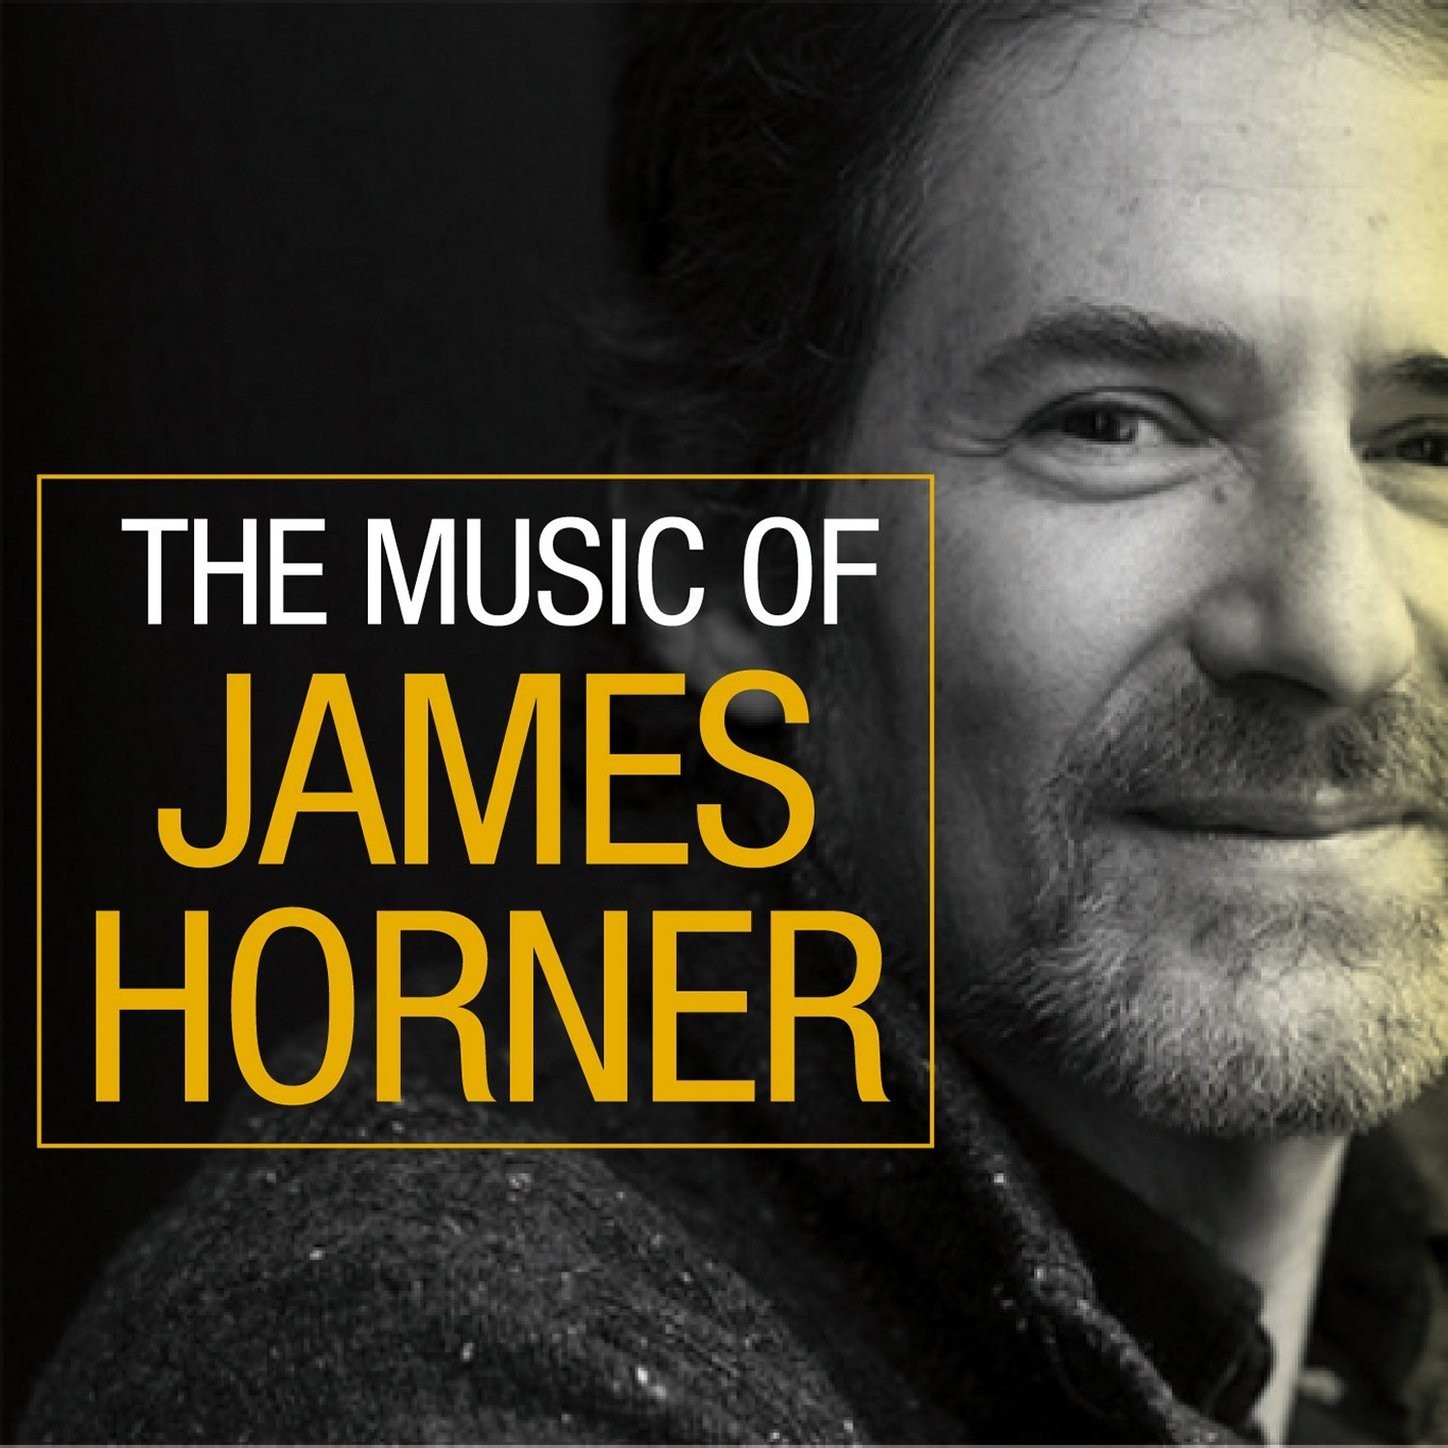 horner james studio academy cd theme orchestra spider titanic heart film song soundtrack amazing close soundtracks filmmusicsite nickel